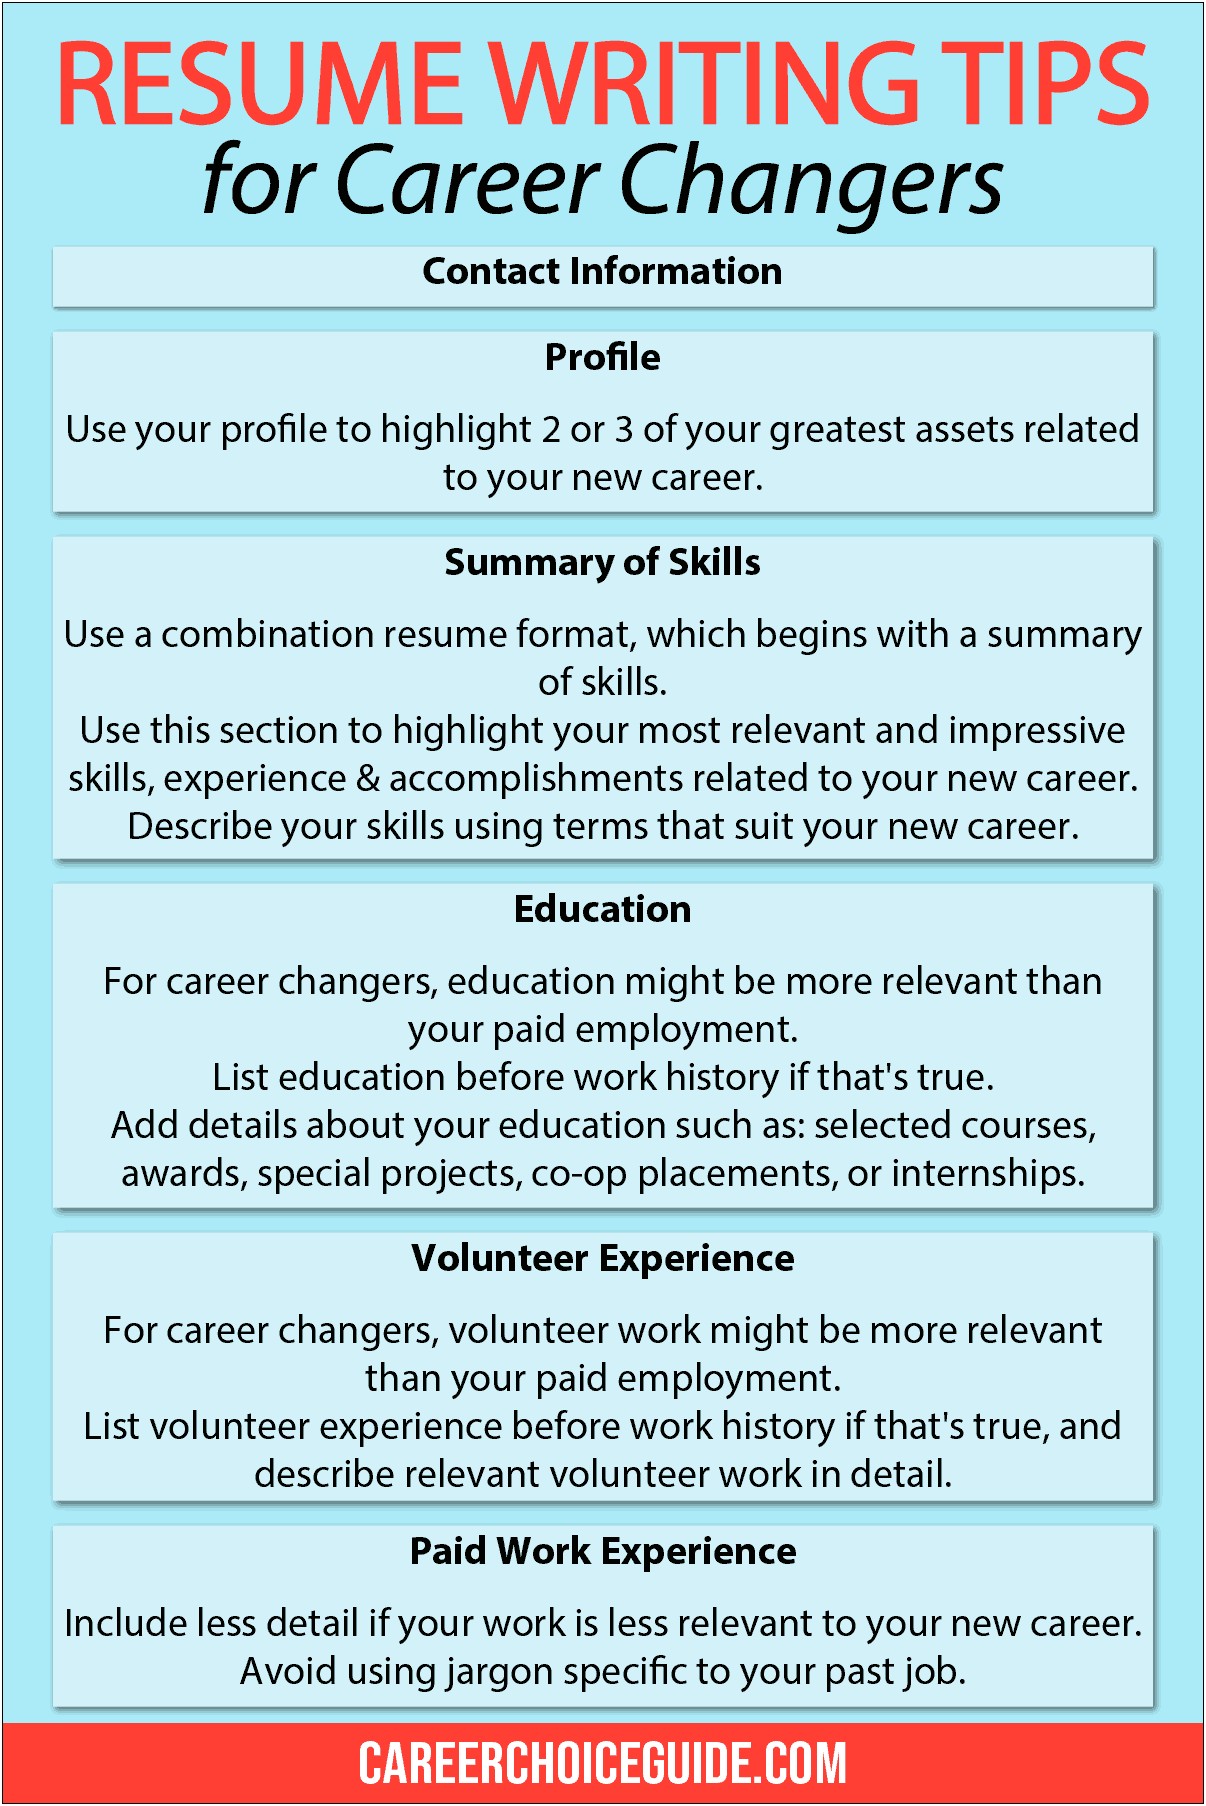 Describing Volunteer Work On A Resume